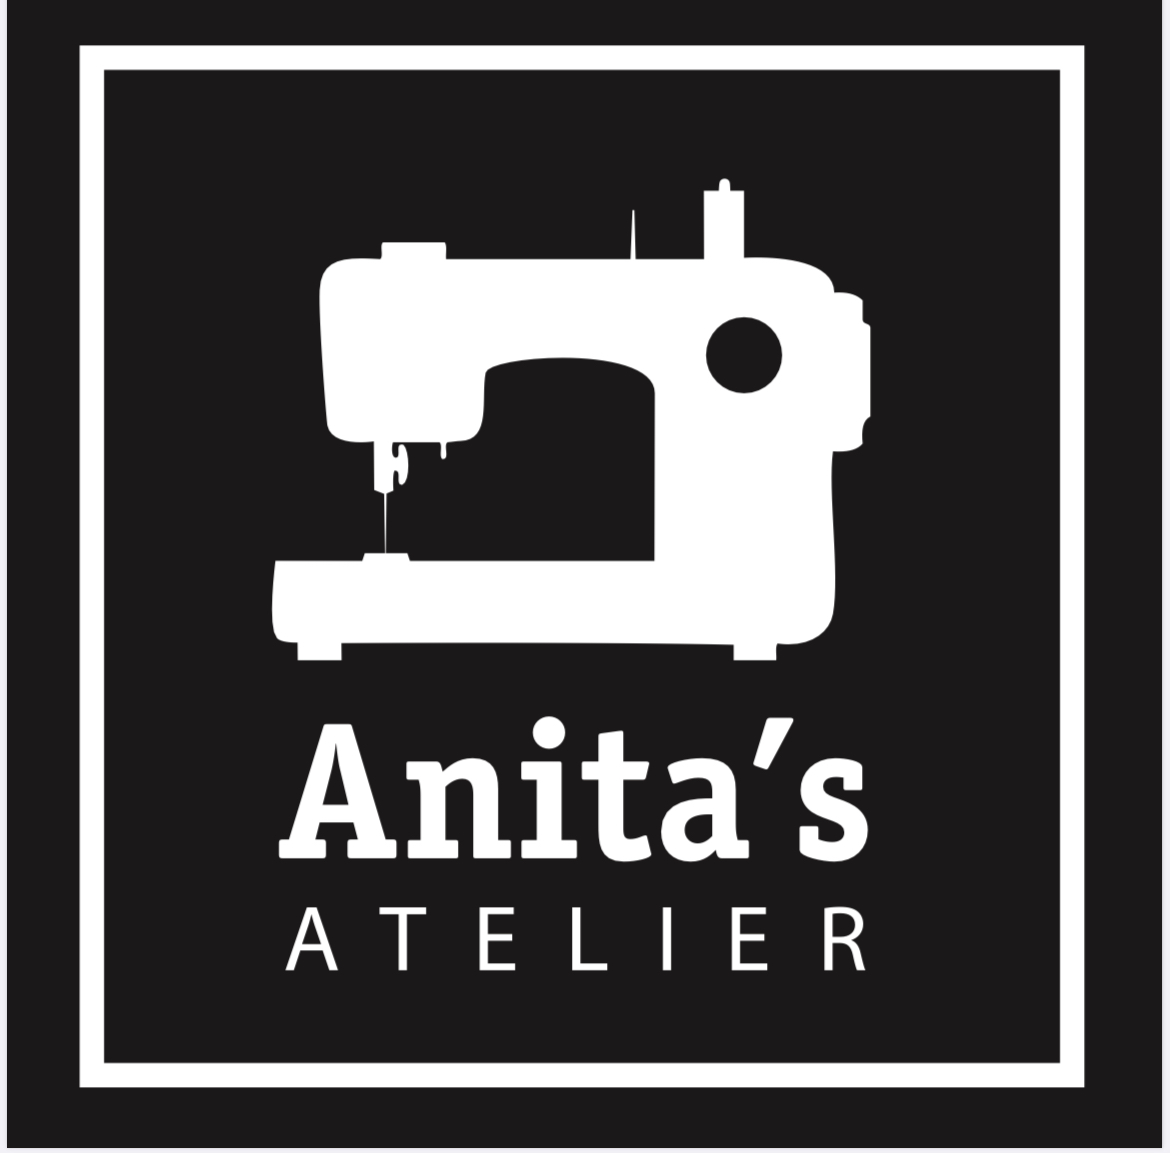 Anita's Atelier